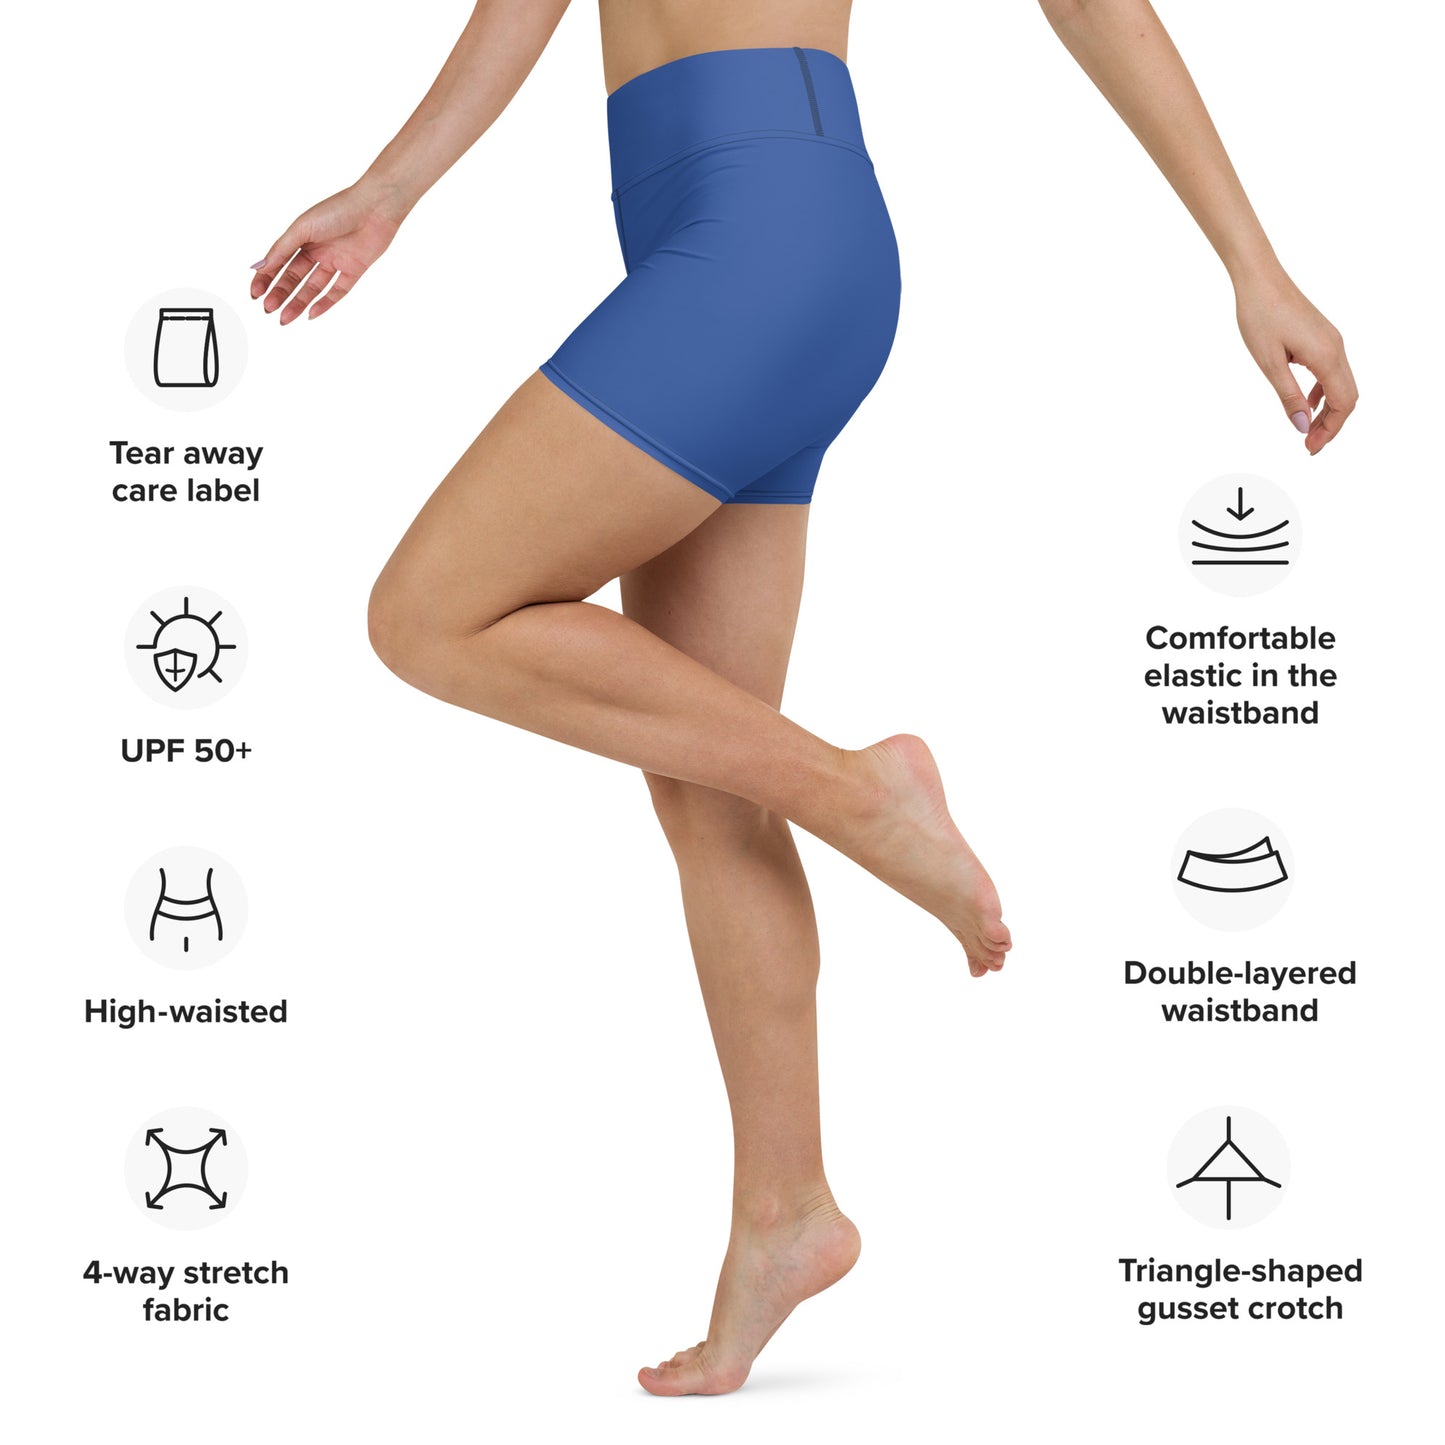 Ojos Solid Blue High Waist Yoga Shorts / Bike Shorts with Inside Pocket